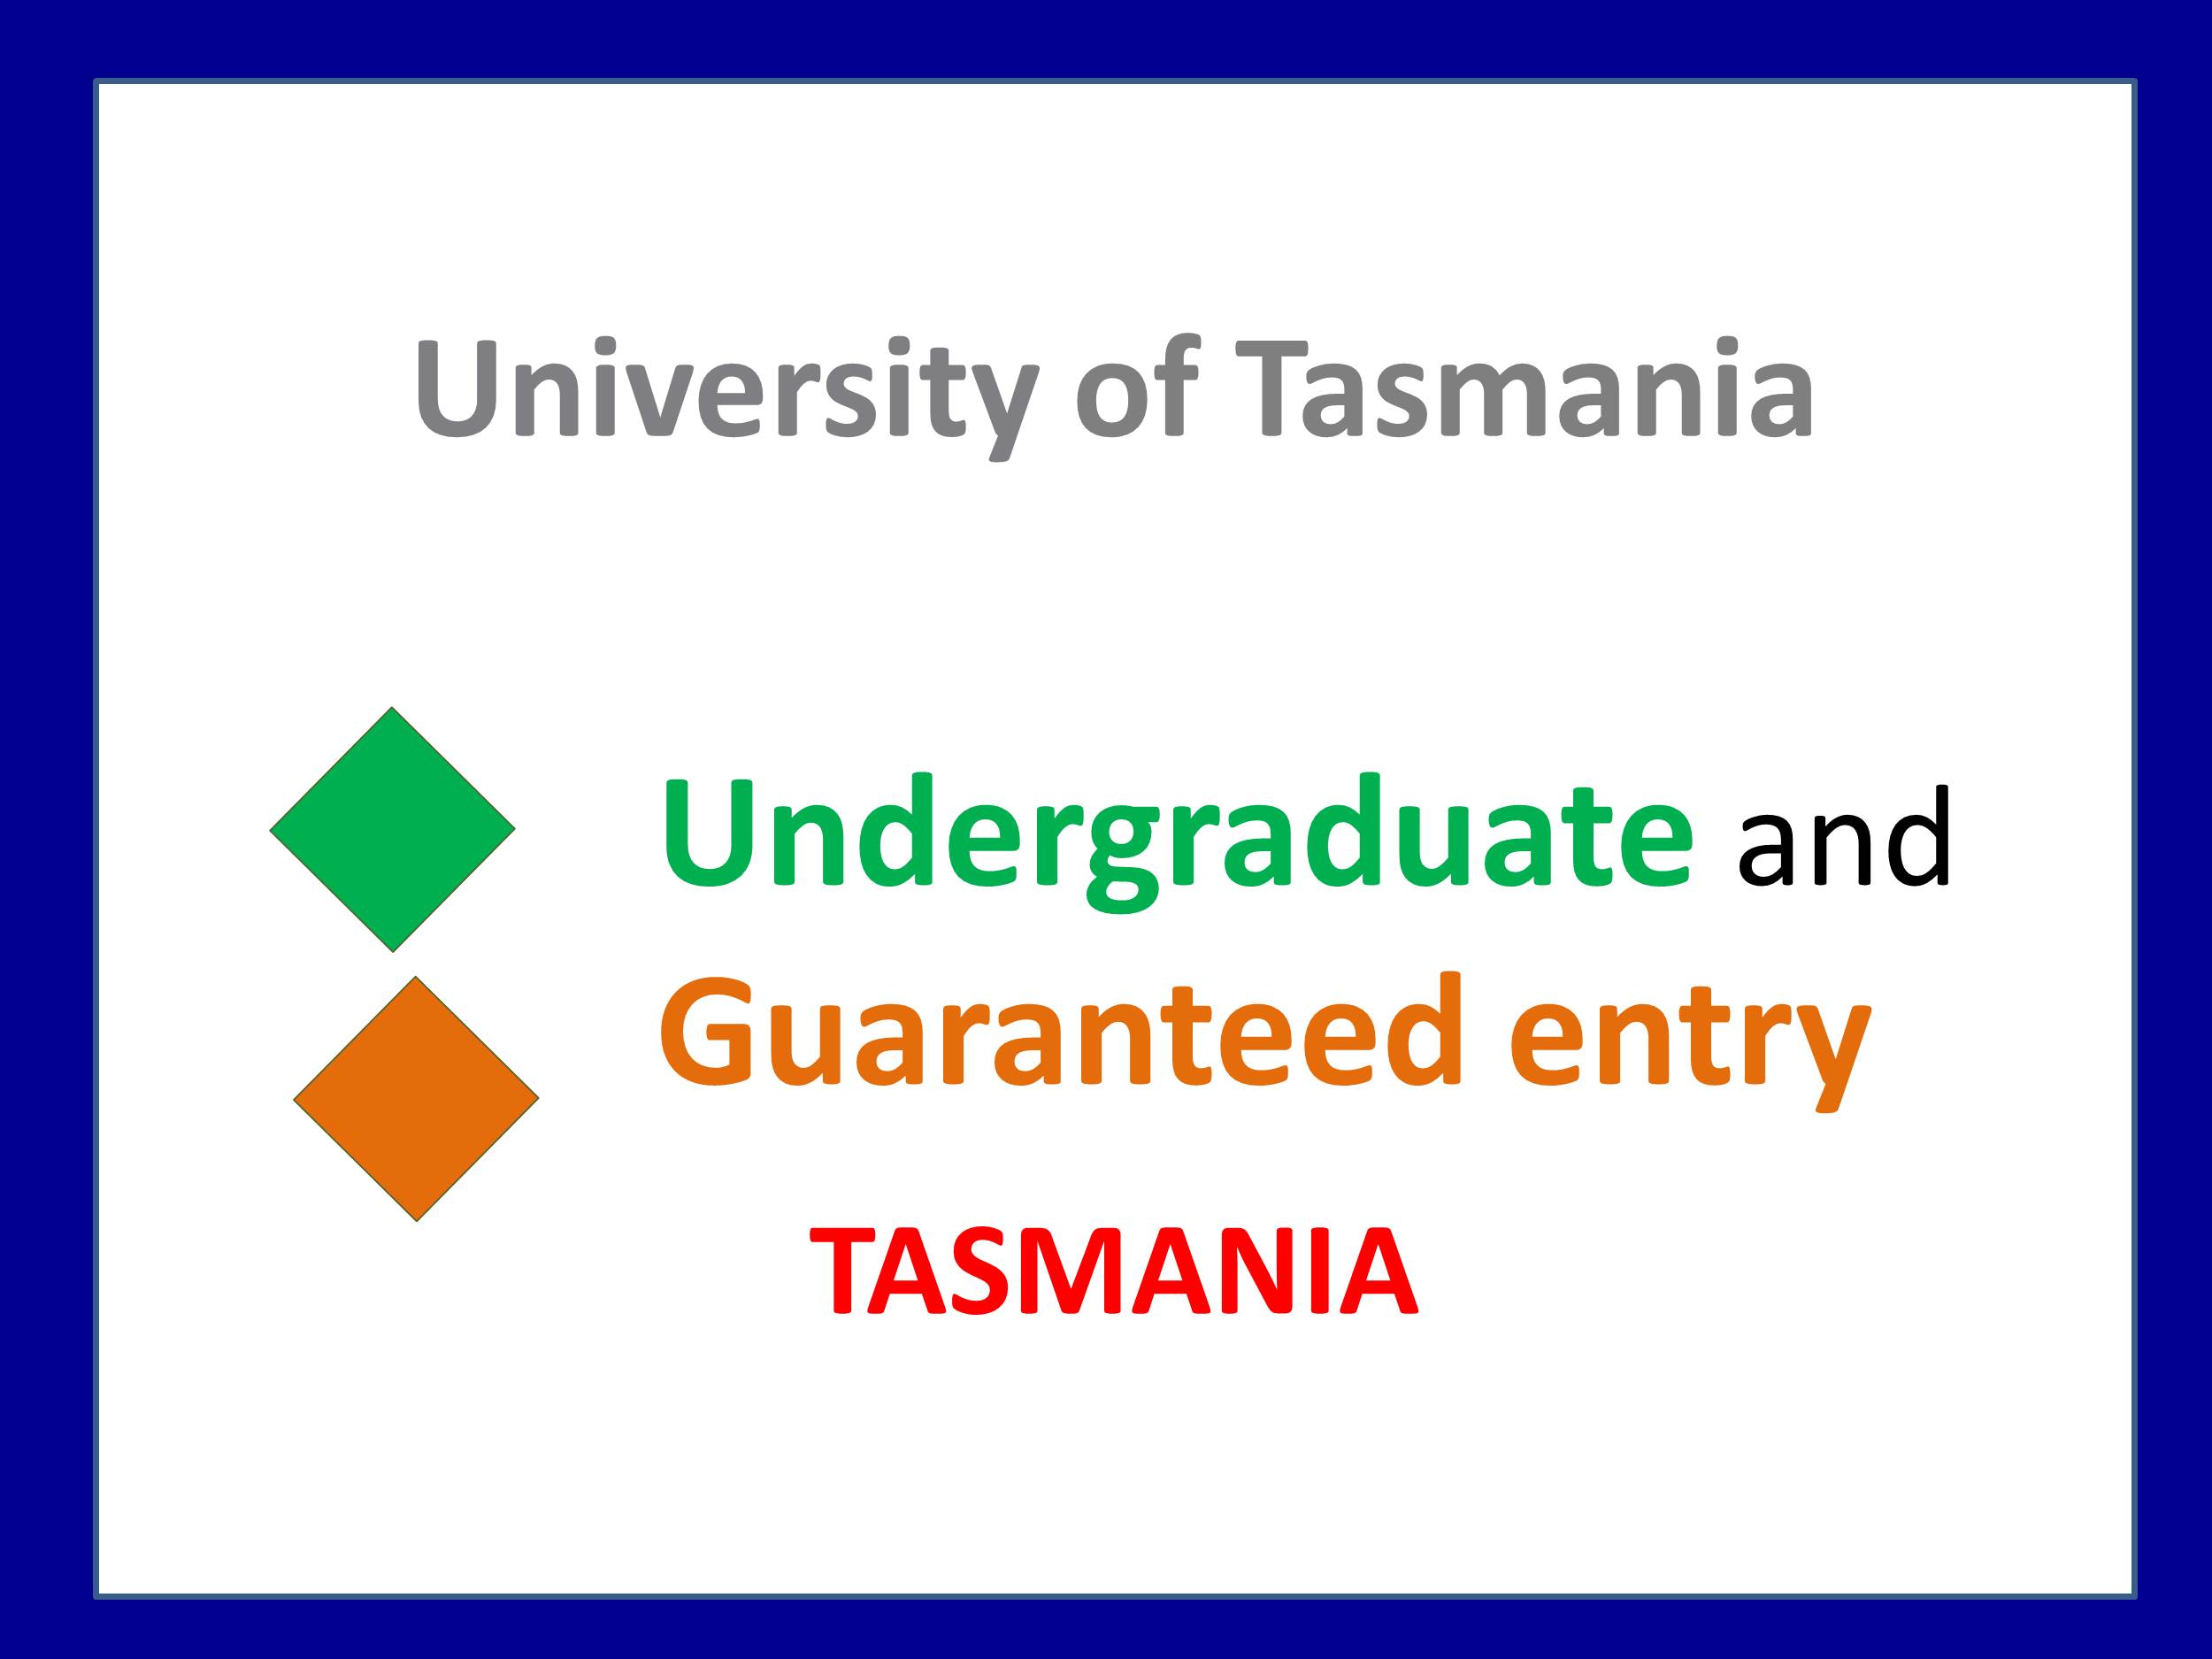 University of Tasmania medicine